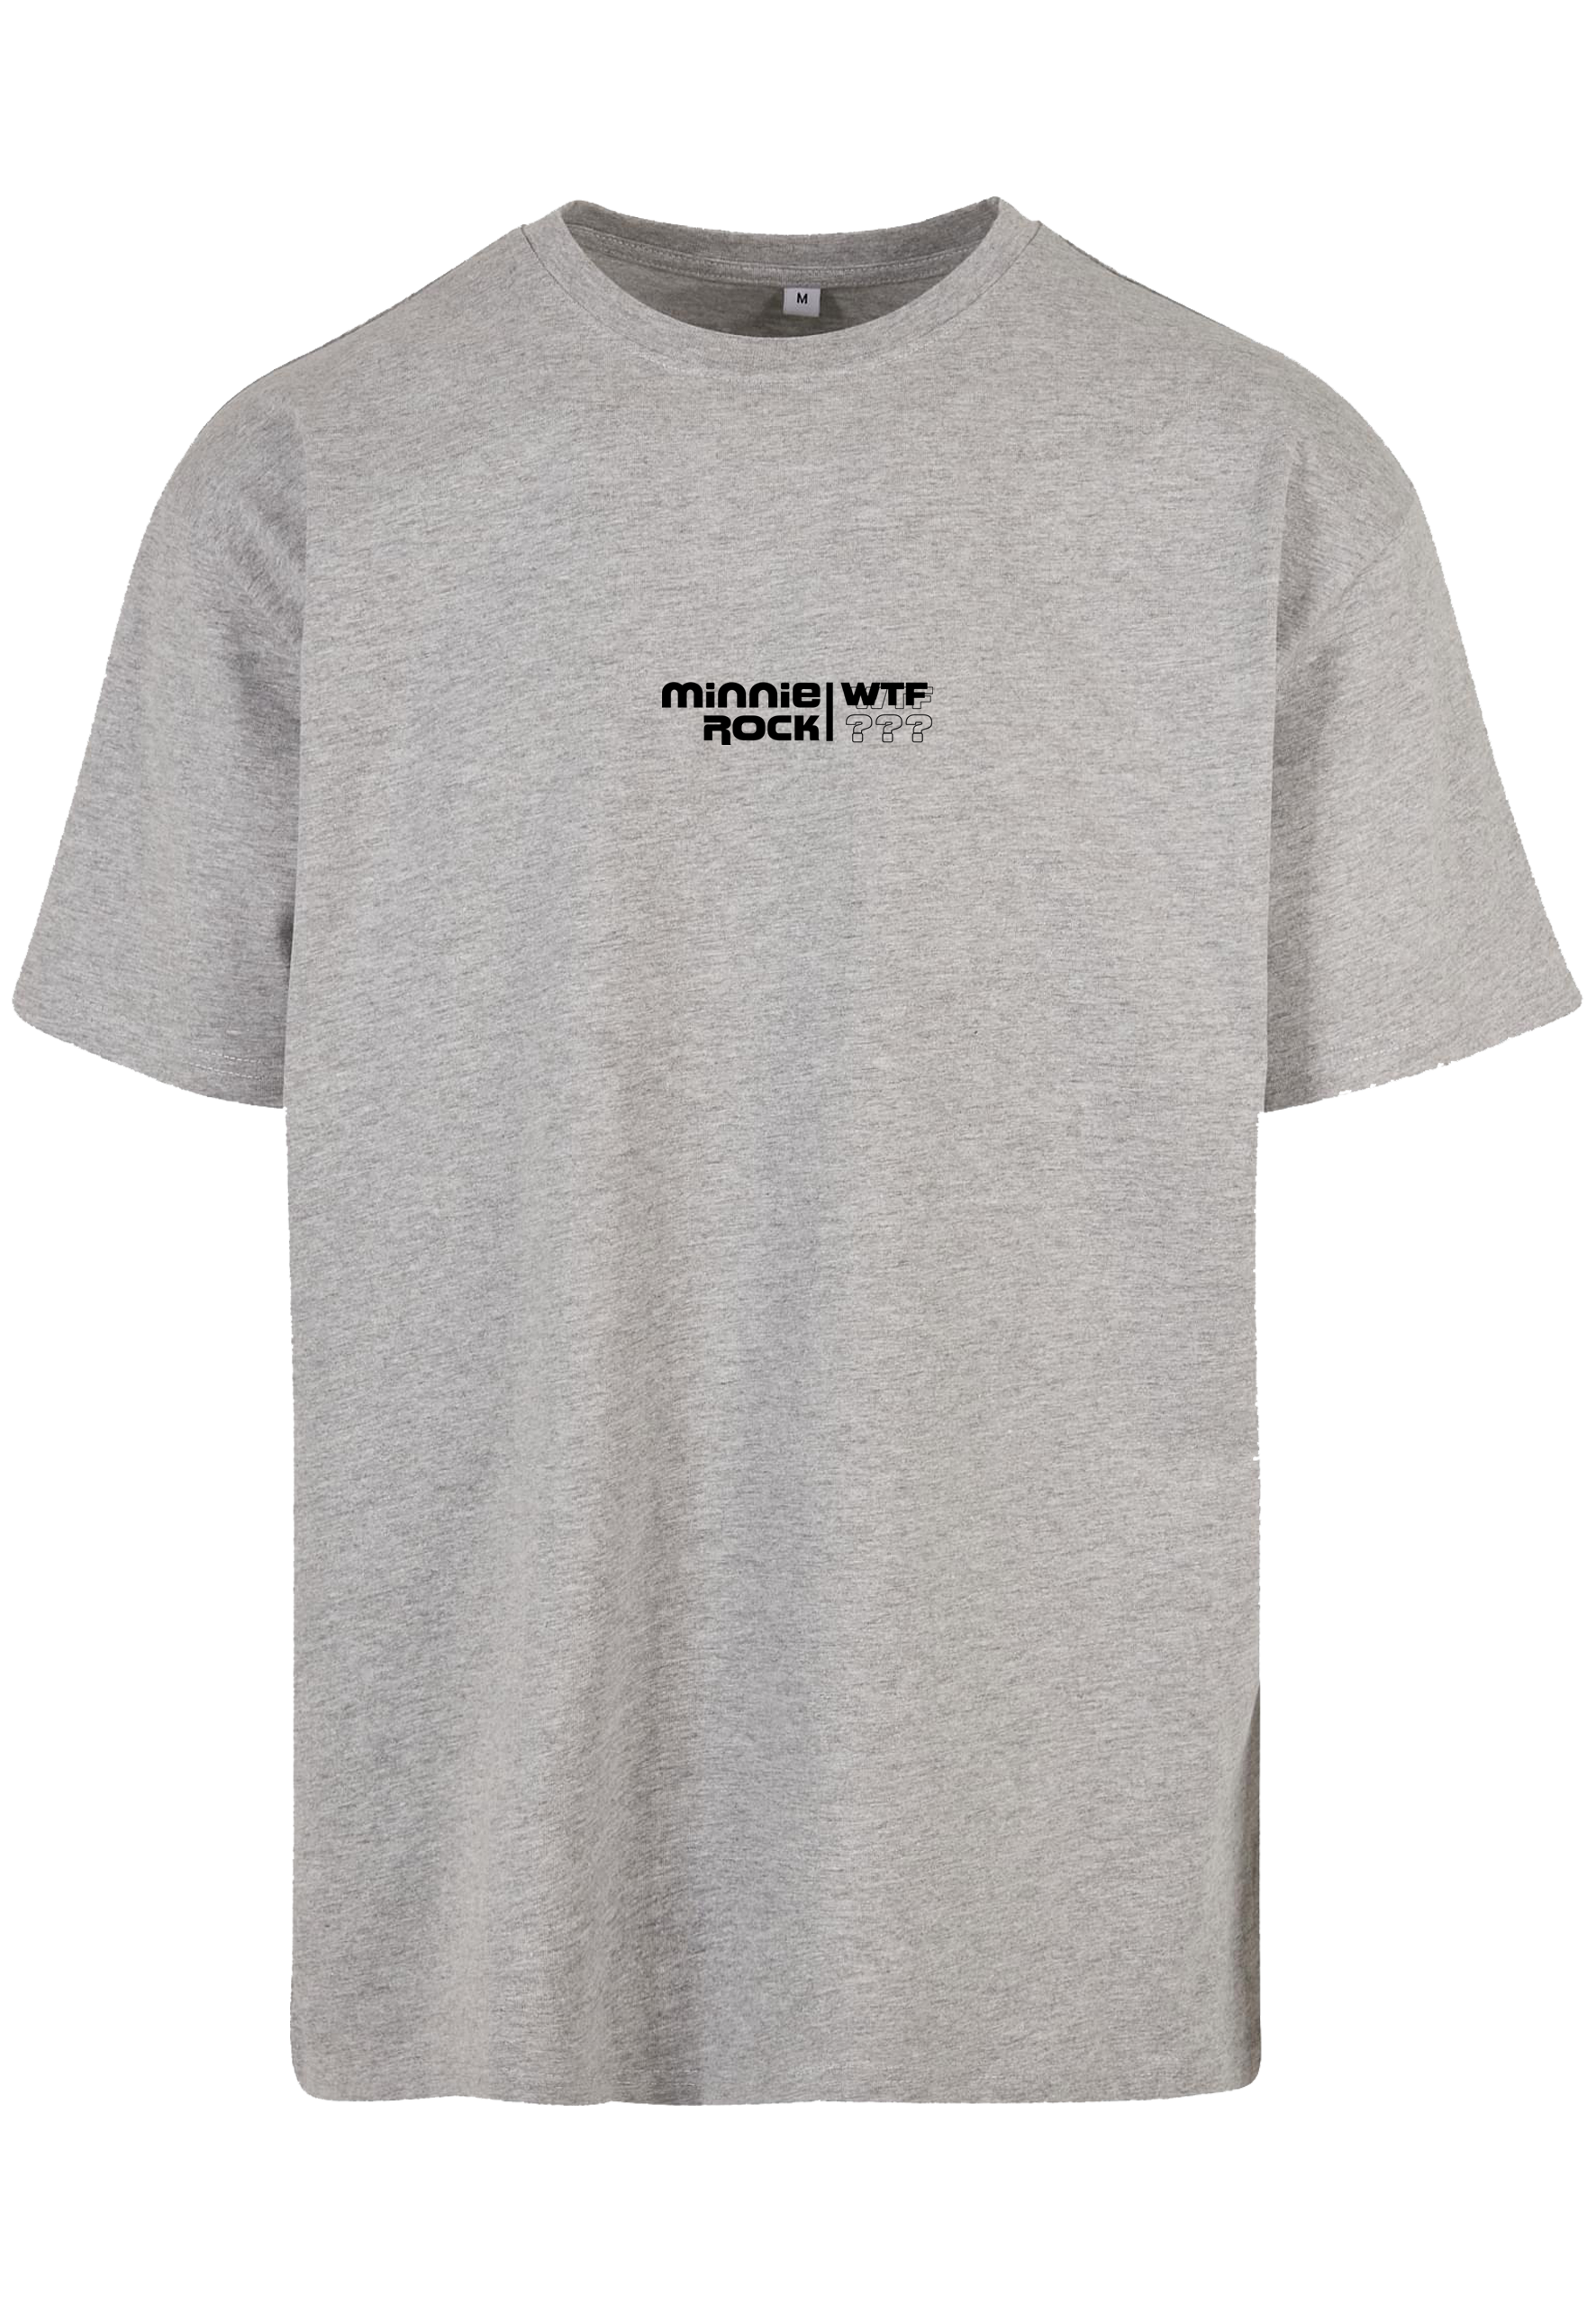 minnie rock - WTF is minnie - Unisex Oversized T-Shirt [grau]